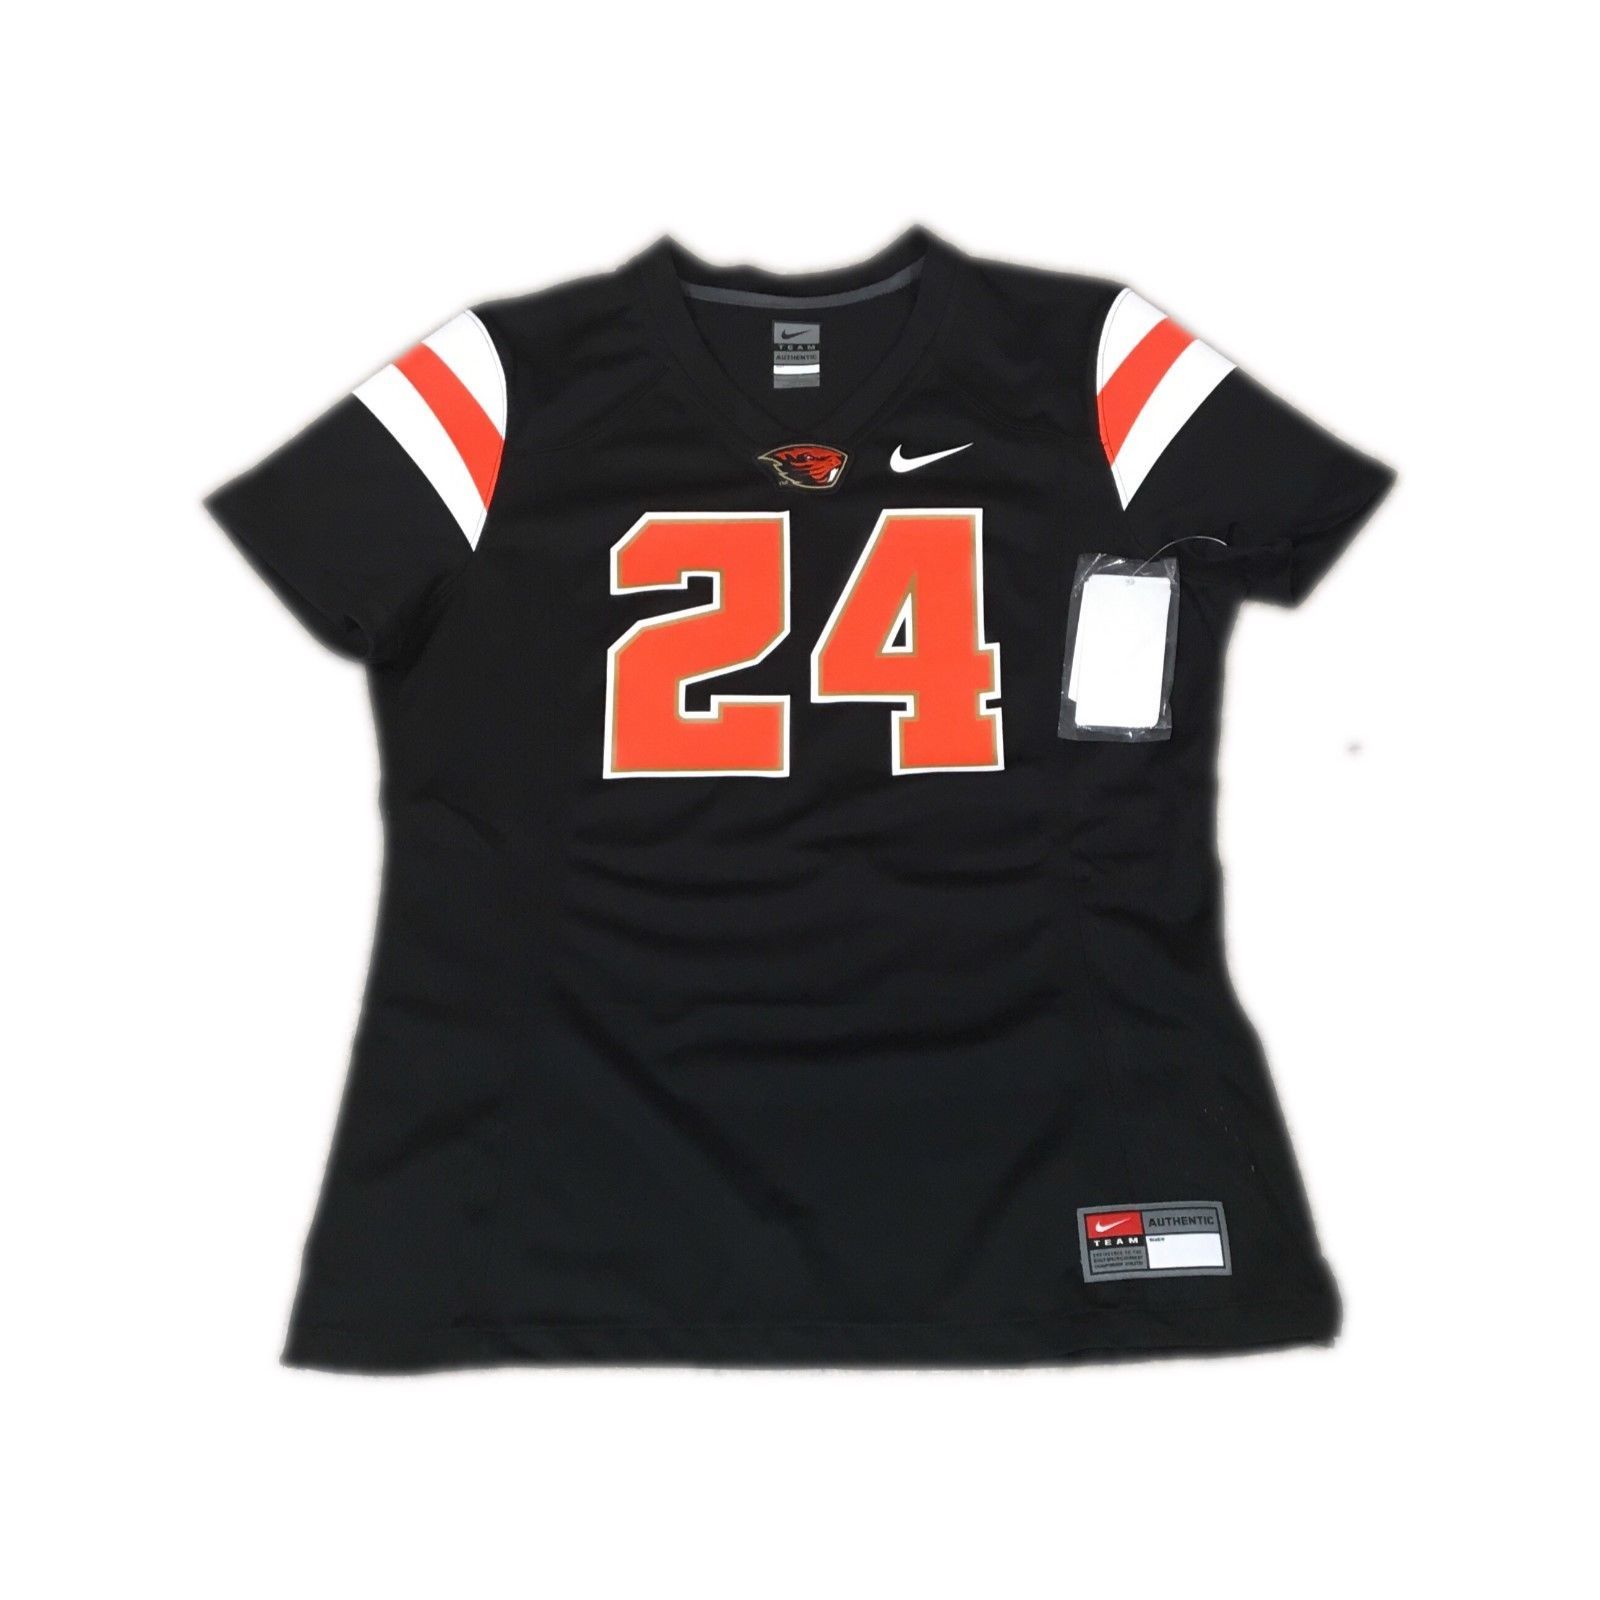 NWT NEW Oregon State Beavers Nike #24 Women's Replica Football Jersey Medium - $27.91